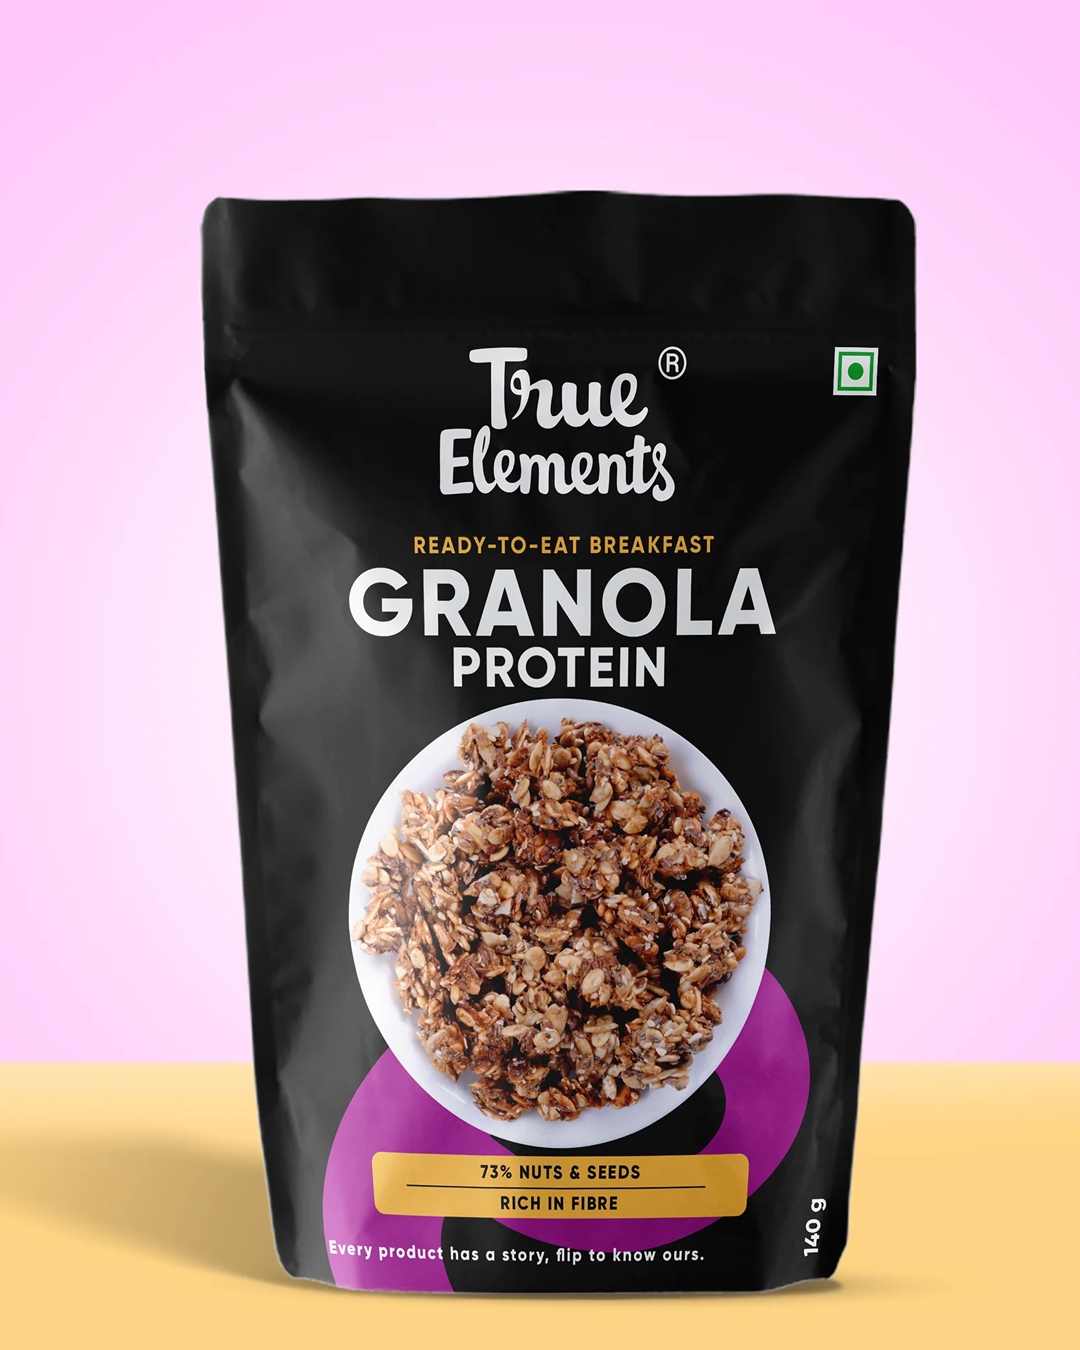 True Elements Protein Granola - Contains 21.6g Protein